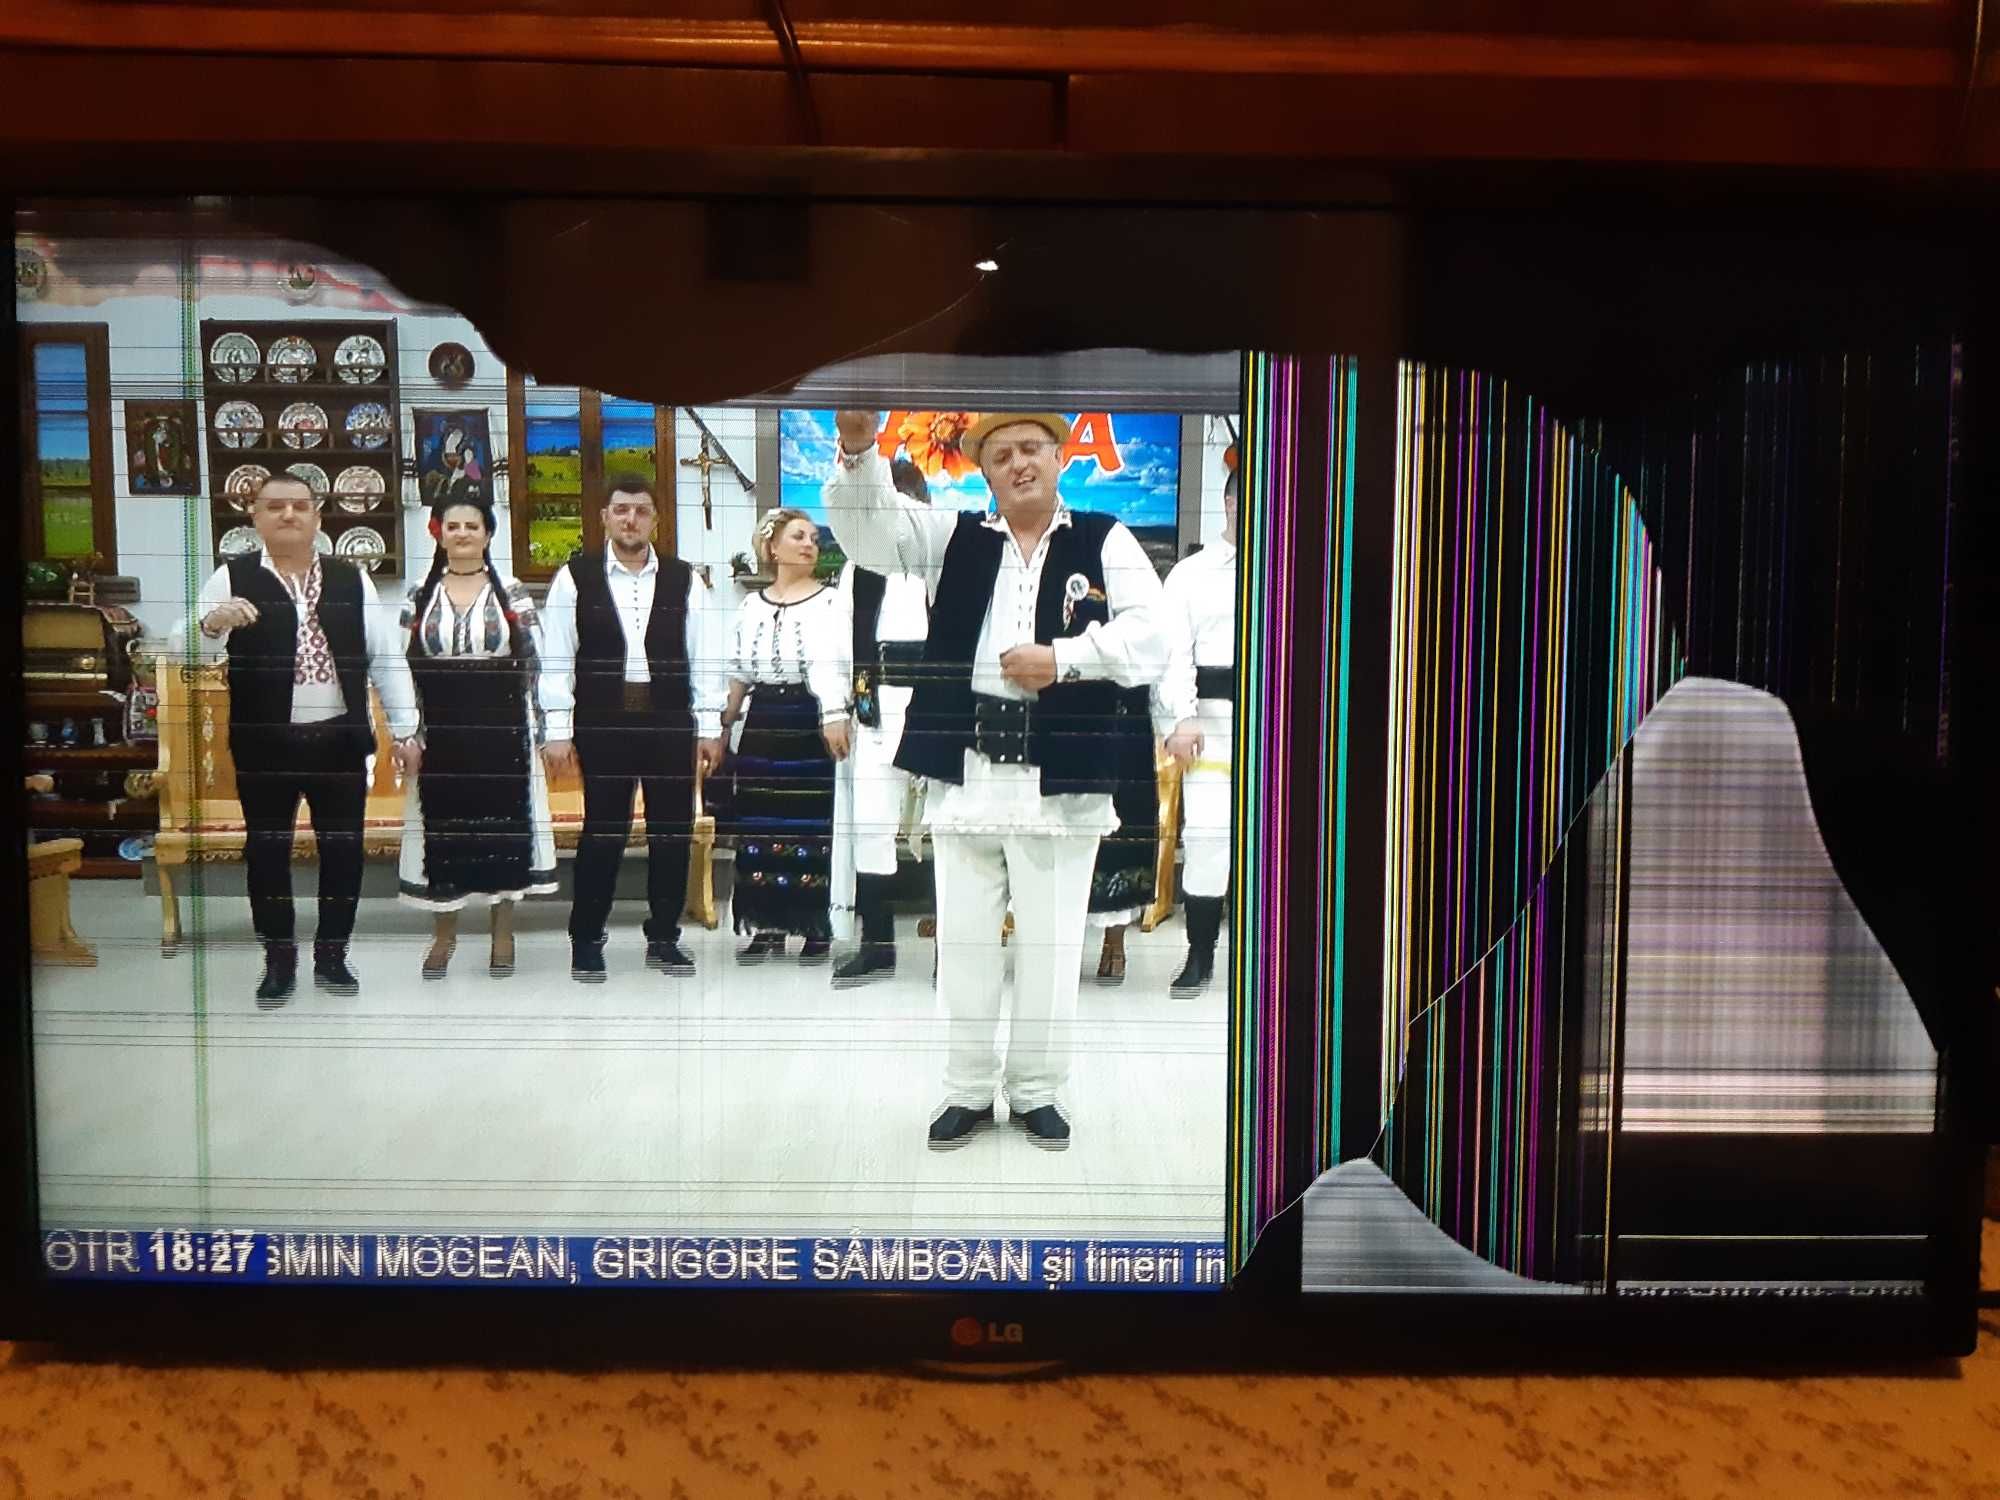 Televizor smart  Lg 32LN575s display spart  pentru piese